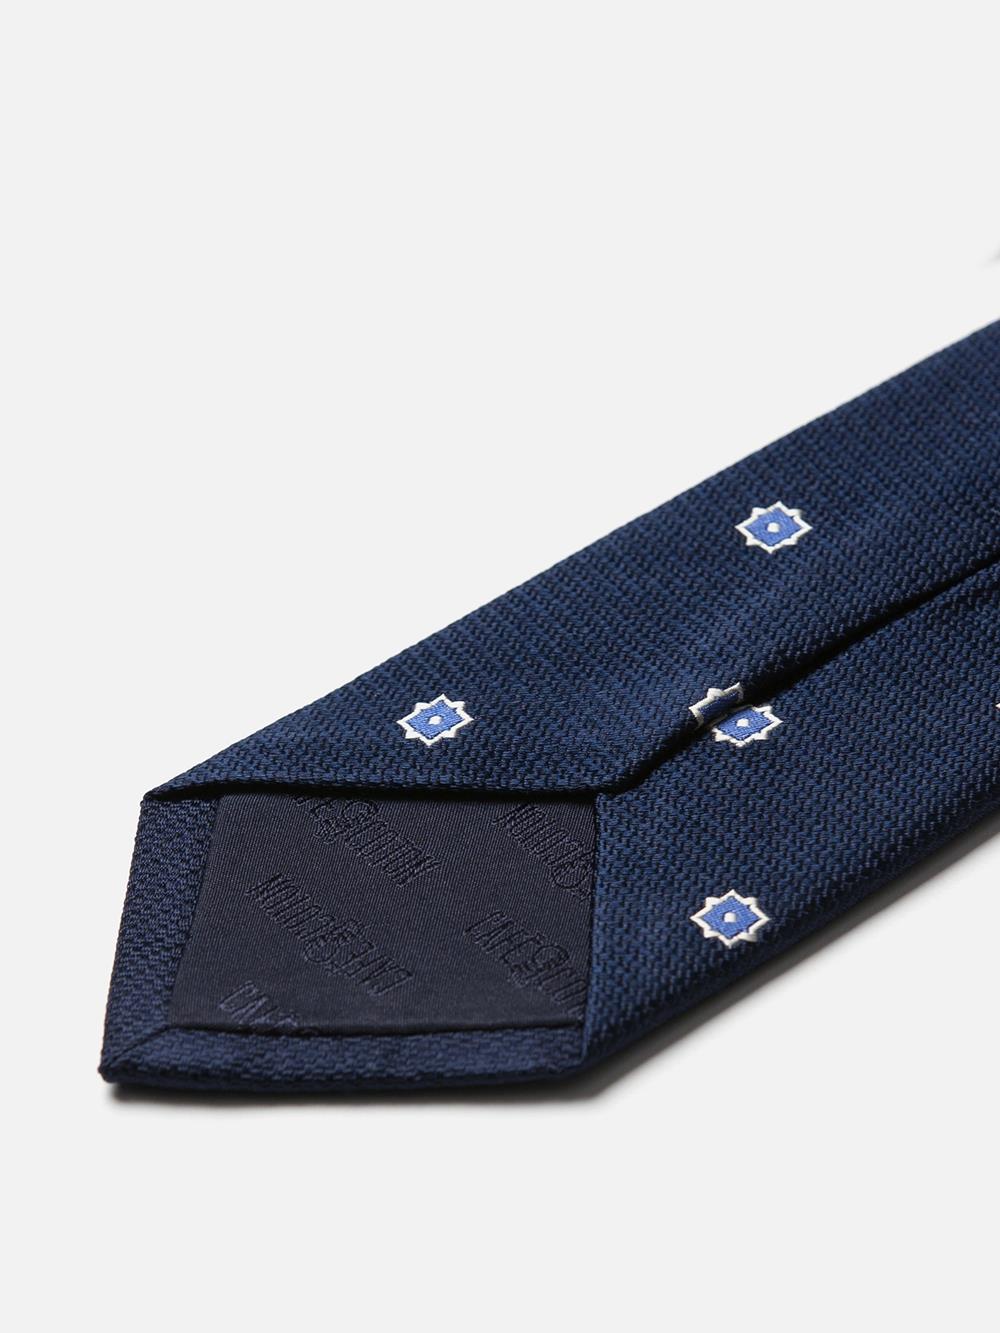 Cravate en soie à motif bleu